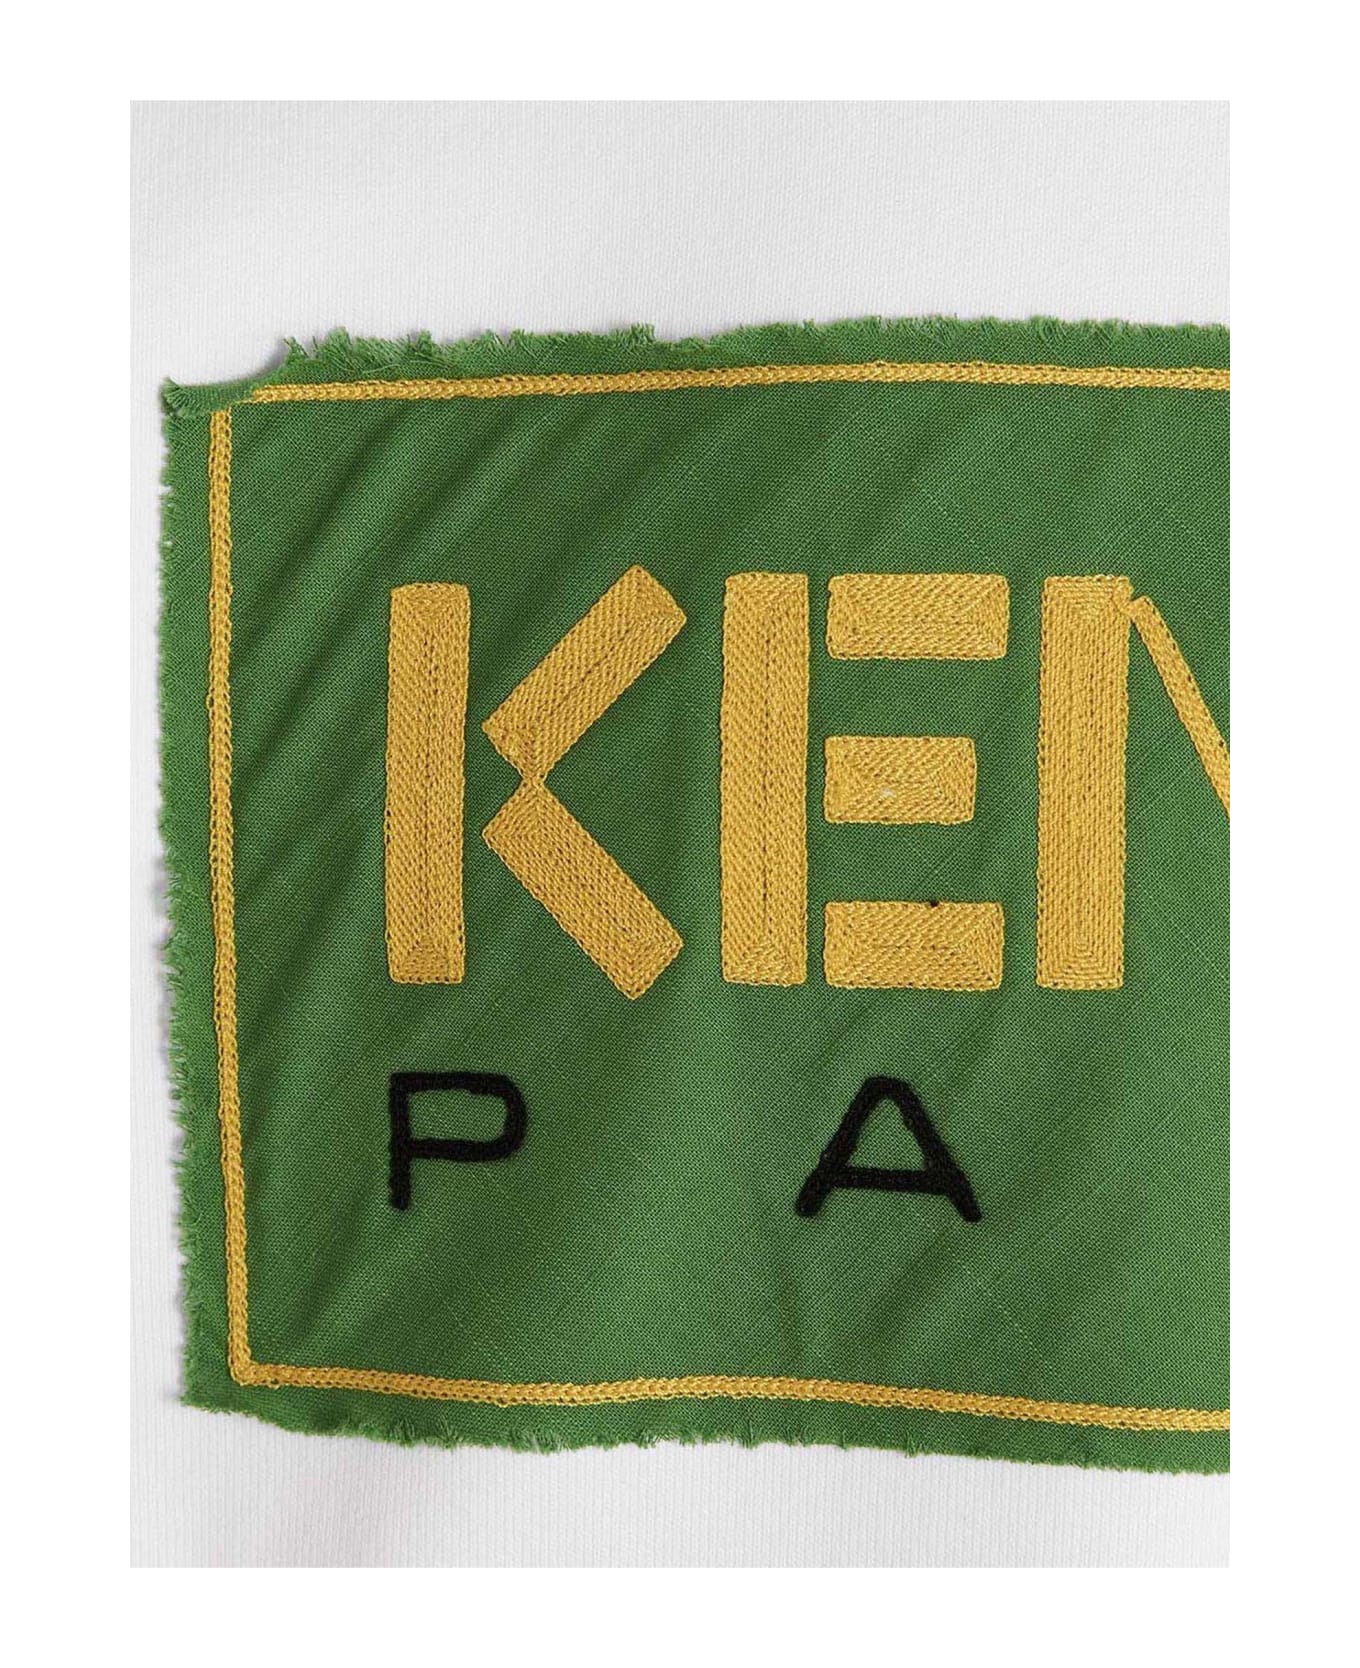 Kenzo Logo Embroidery Hoodie - WHITE